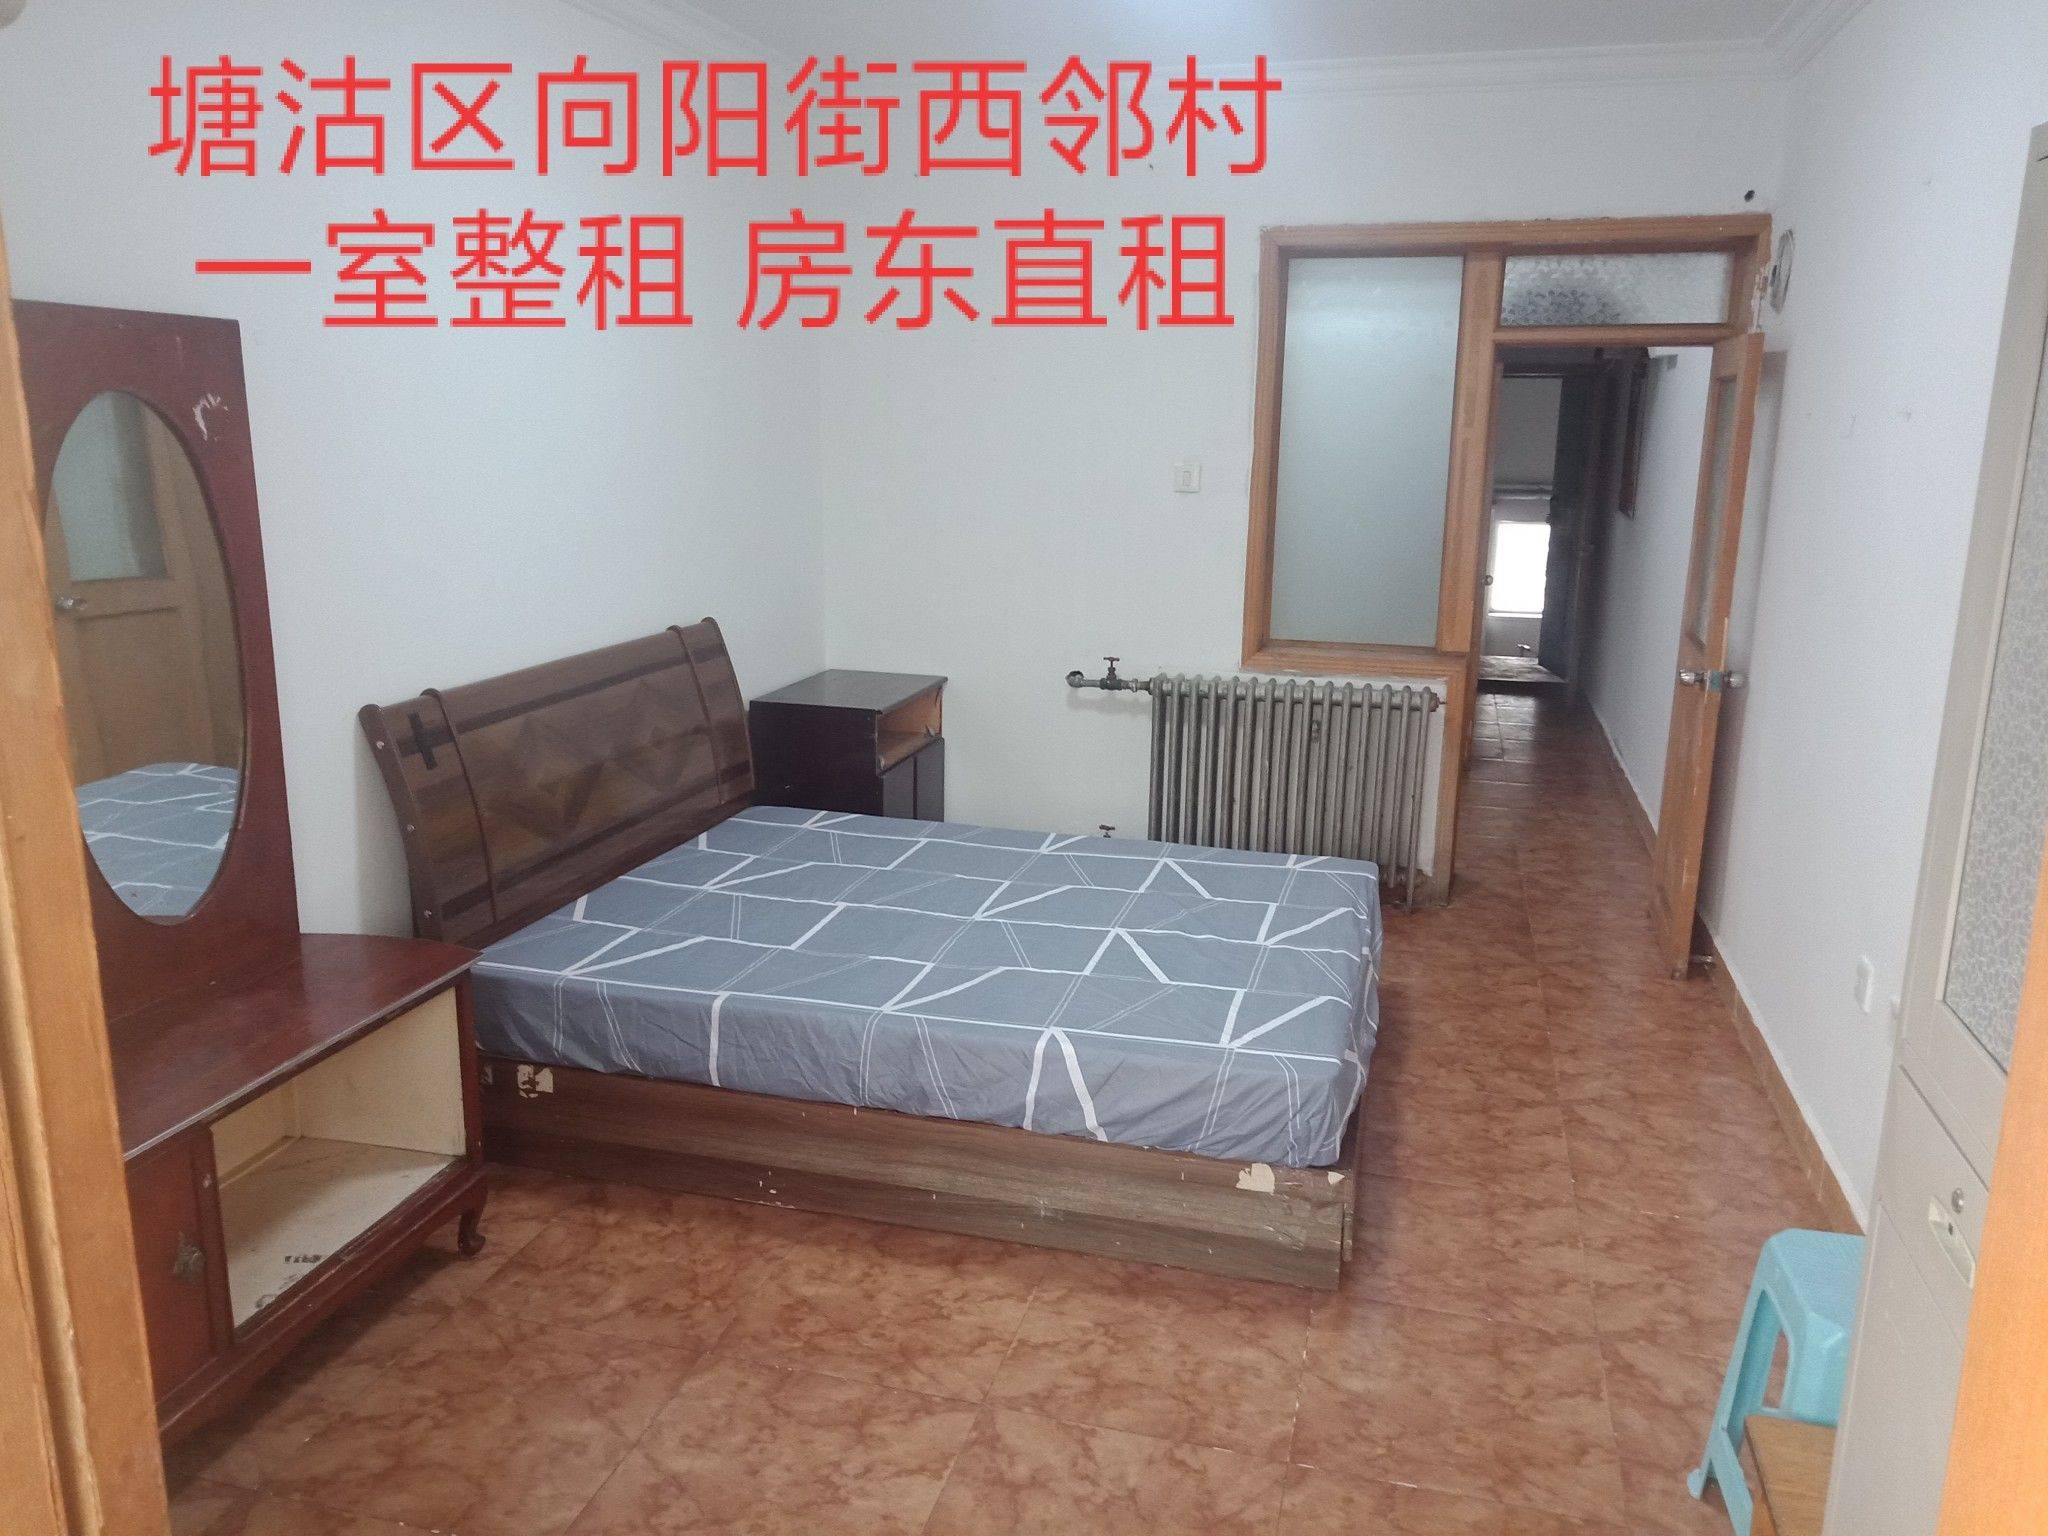 Tianjin-Binhai New -Cozy Home,Clean&Comfy,Hustle & Bustle,Chilled